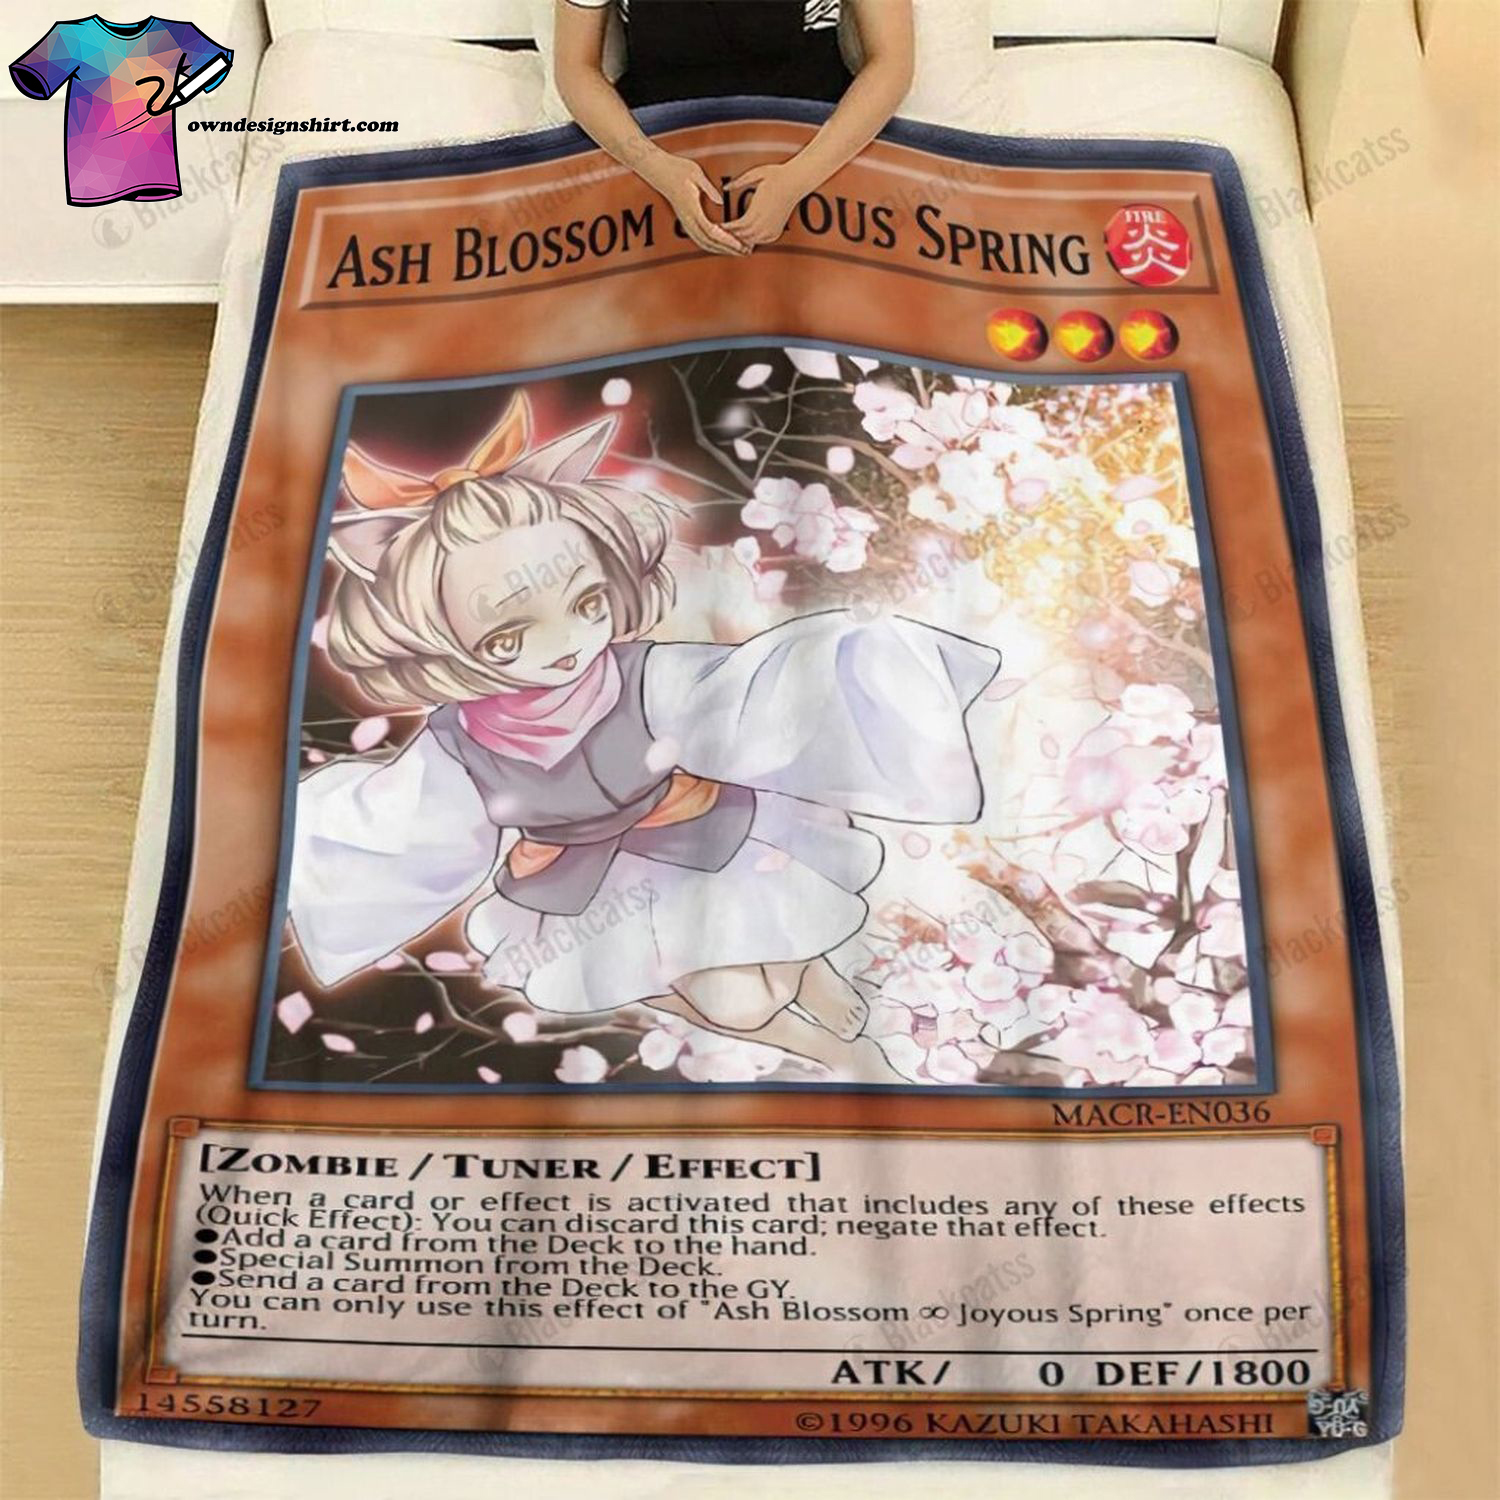 Game Yu-gi-oh Ash Blossom And Joyous Spring Full Print Soft Blanket